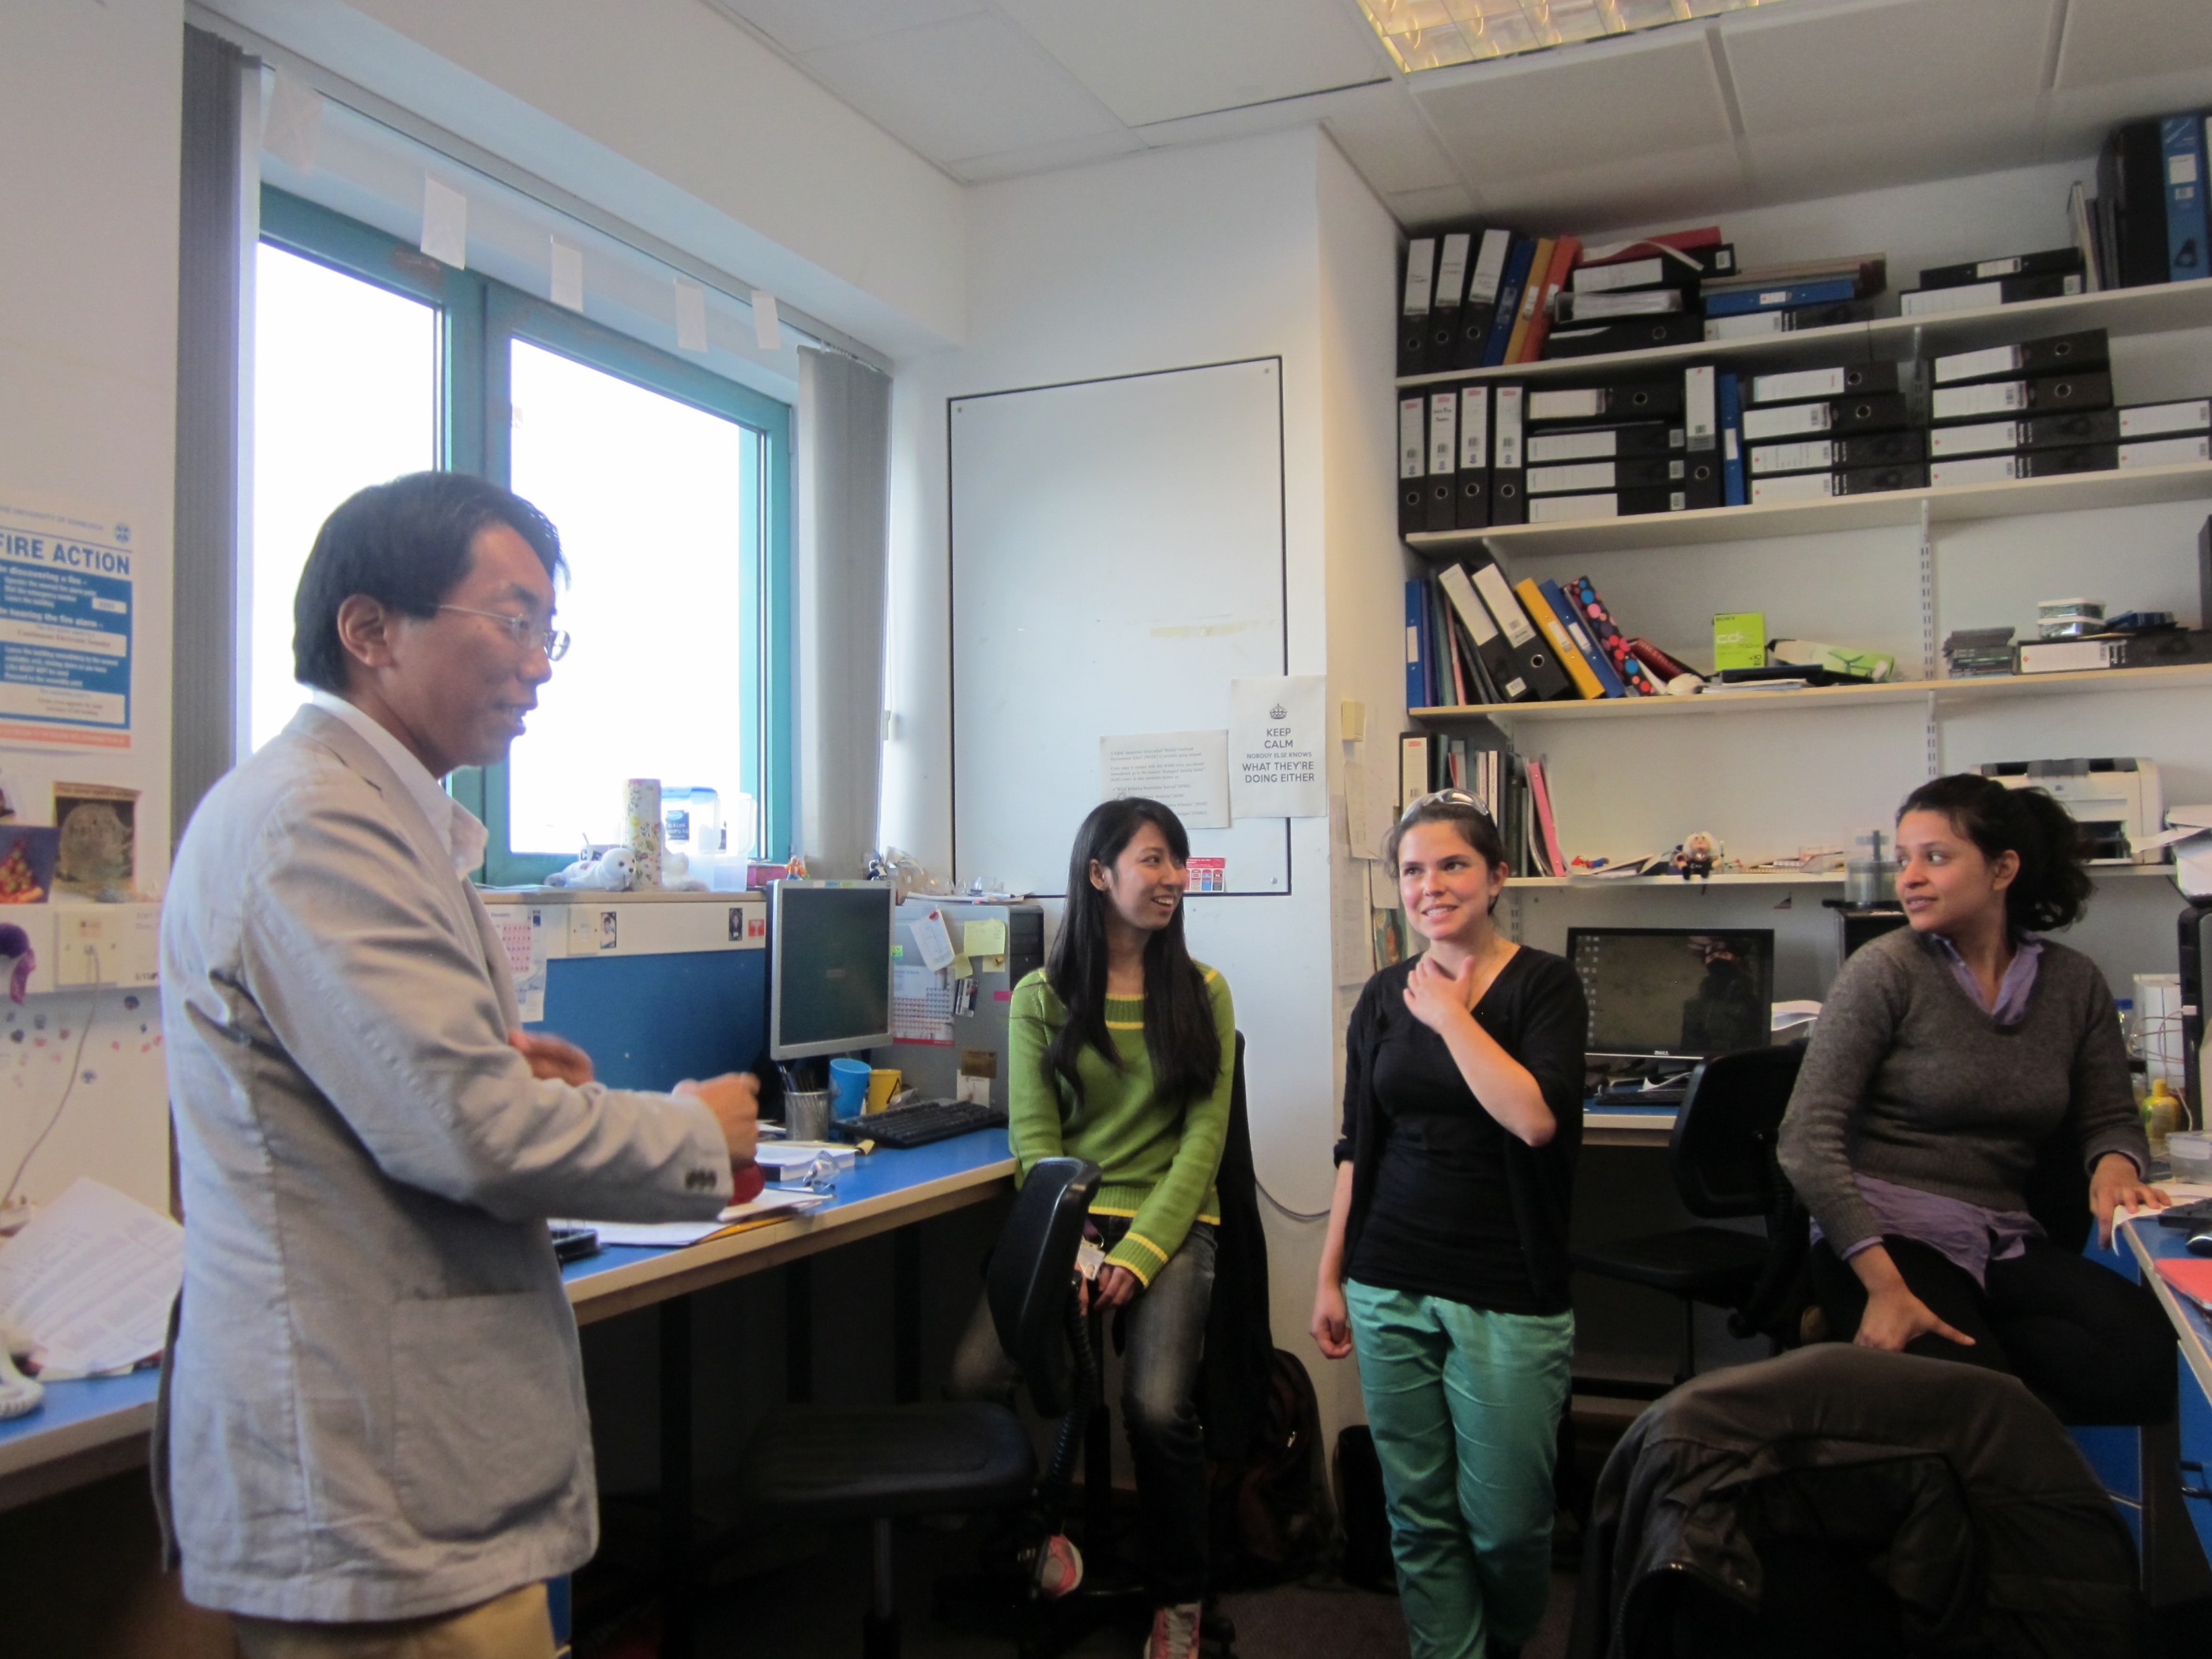 Lab Visit: Discussion and Seminar at the University of Edinburgh